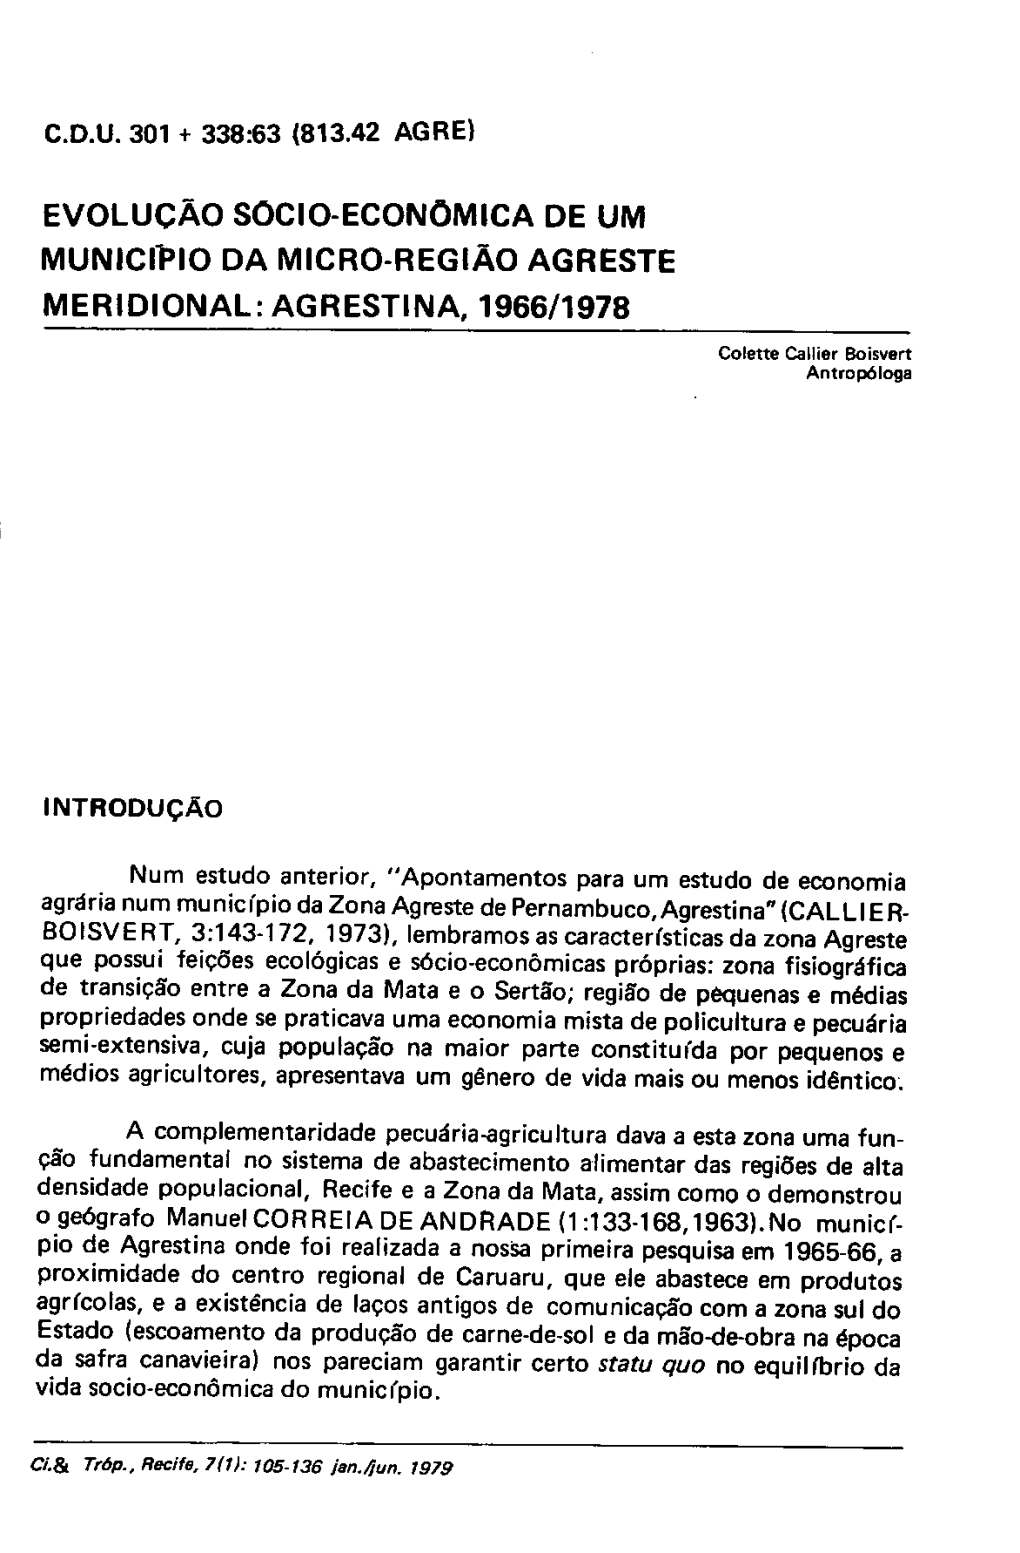 Agrestina, 196611978